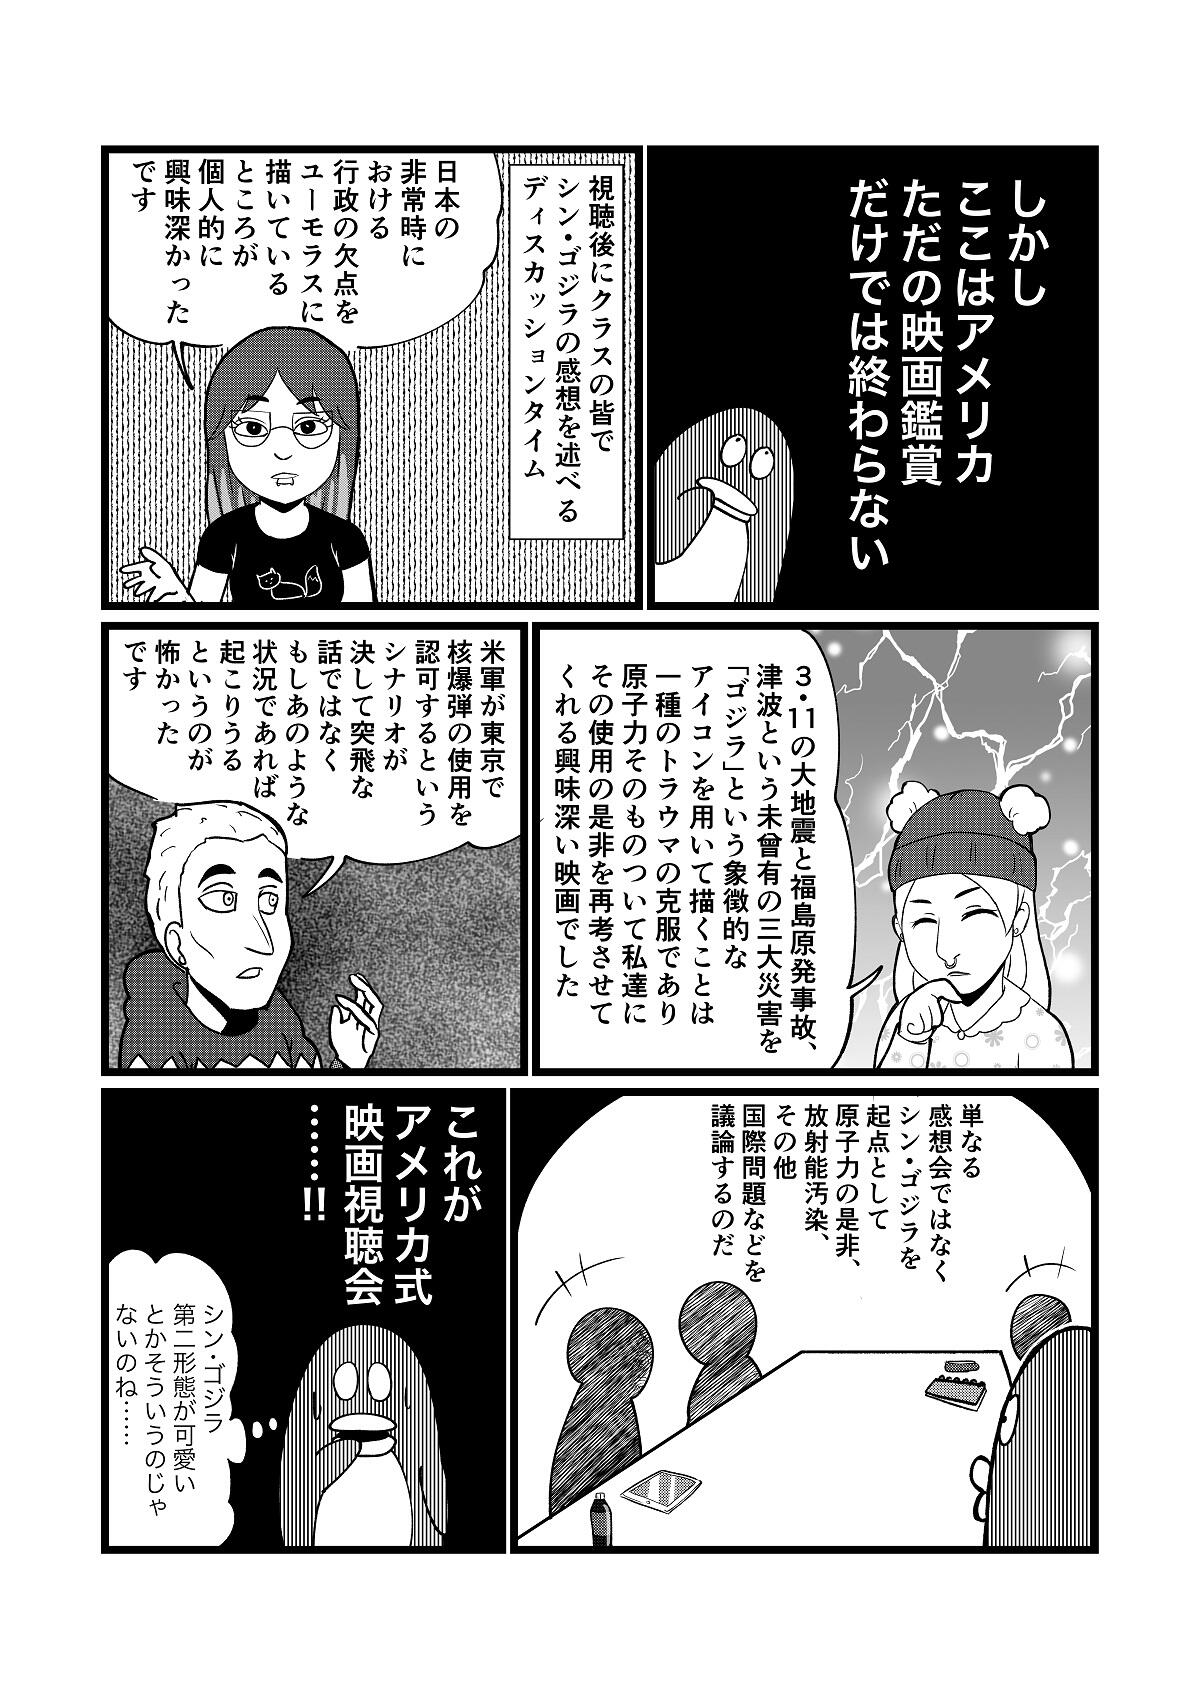 https://www.ryugaku.co.jp/column/images/jawamura20_4_1200.jpg